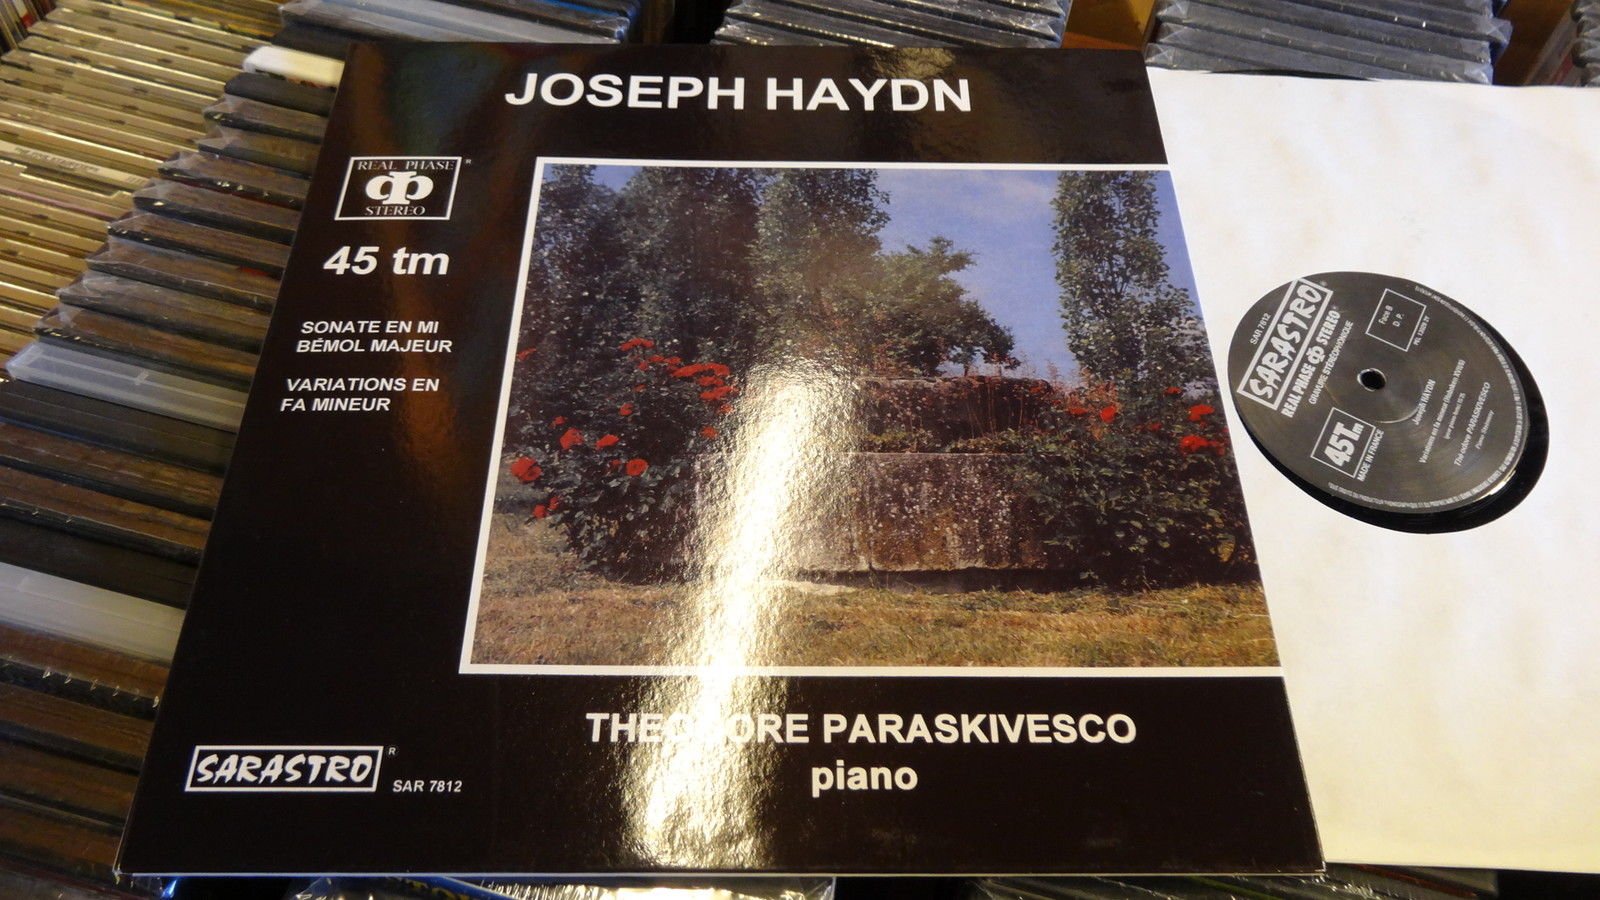 SARASTRO AUDIOPHILE FRENCH 12" LP 45 RPM HAYDN PARASKIVESCO PIANO vinyl version , not cd!!!